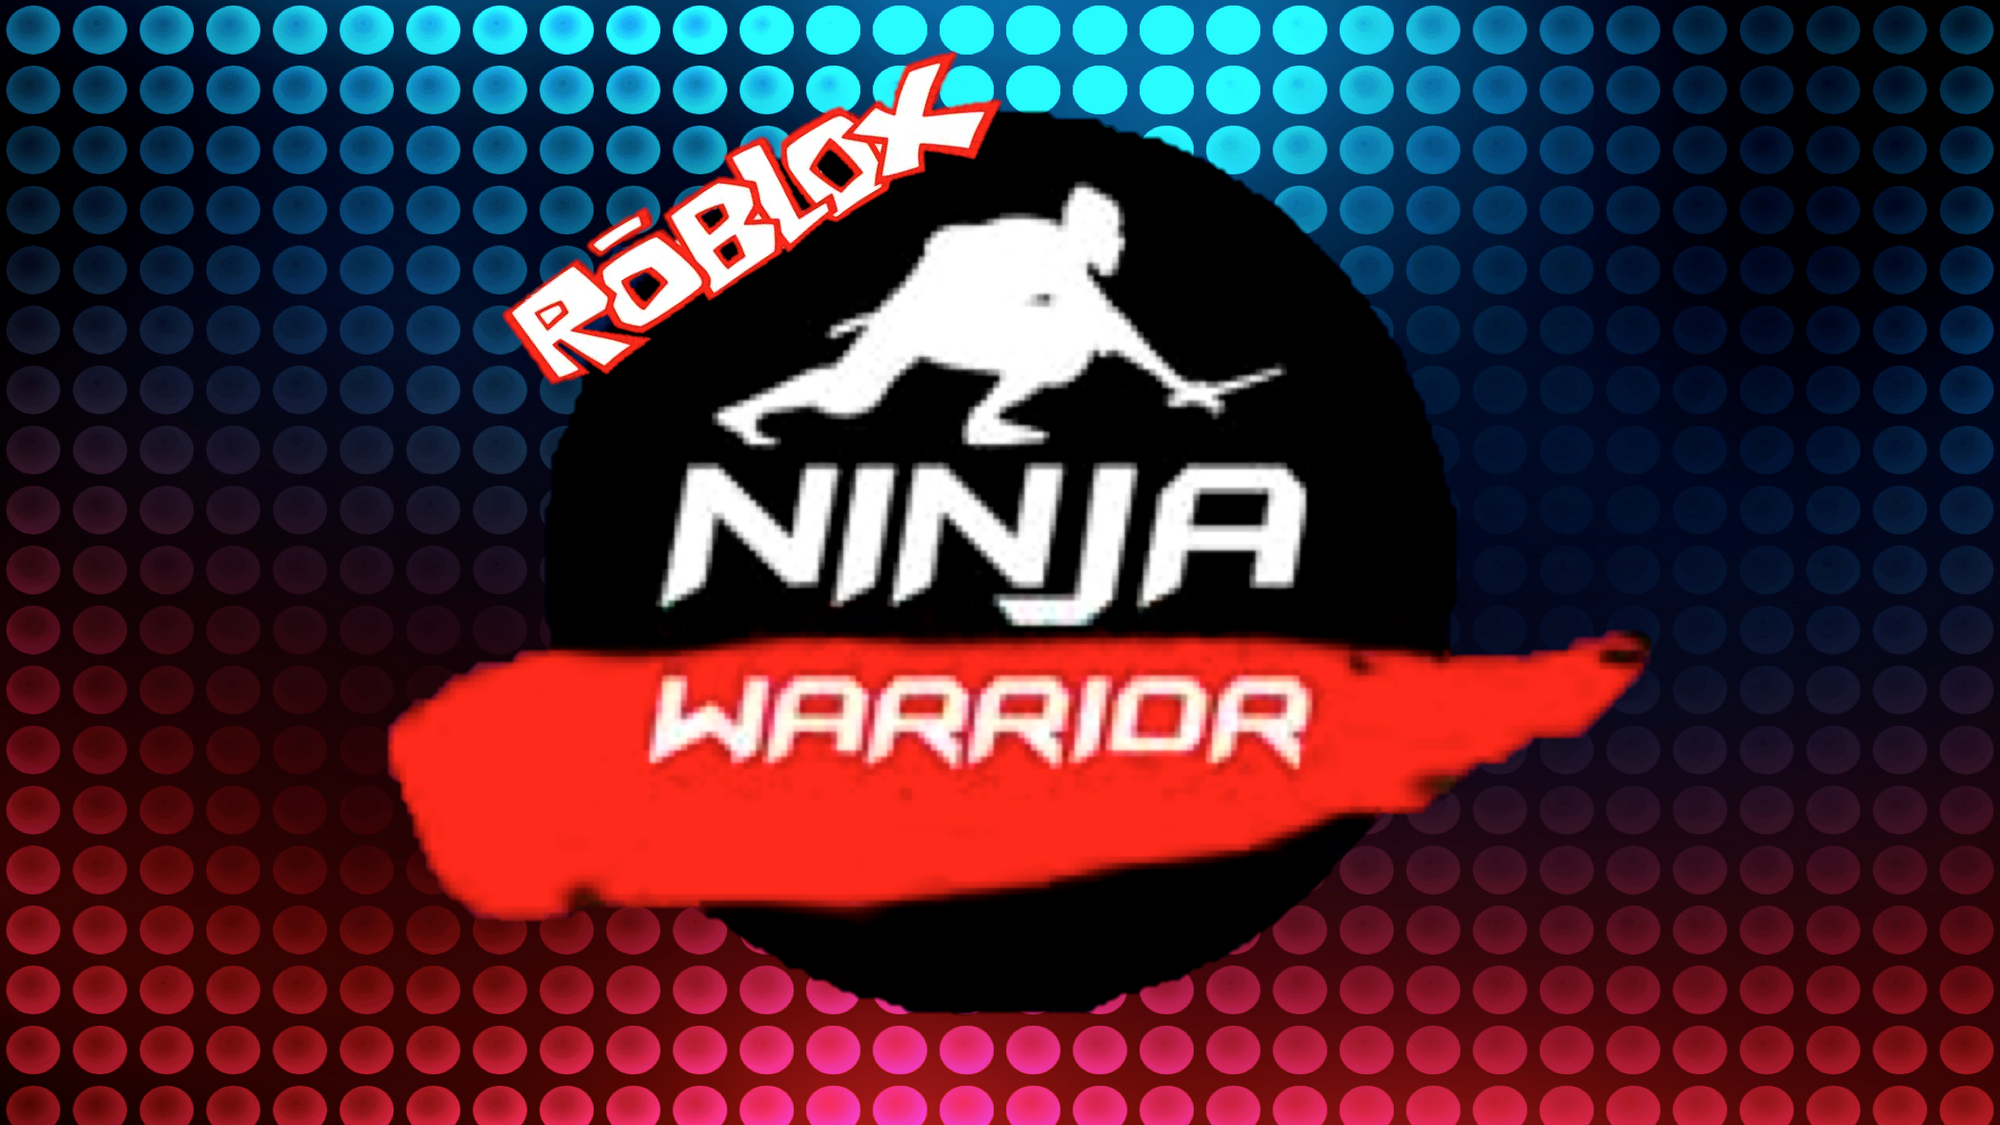 Roblox Ninja Warrior Custom Sasukepedia Wiki Fandom Powered By Wikia - 